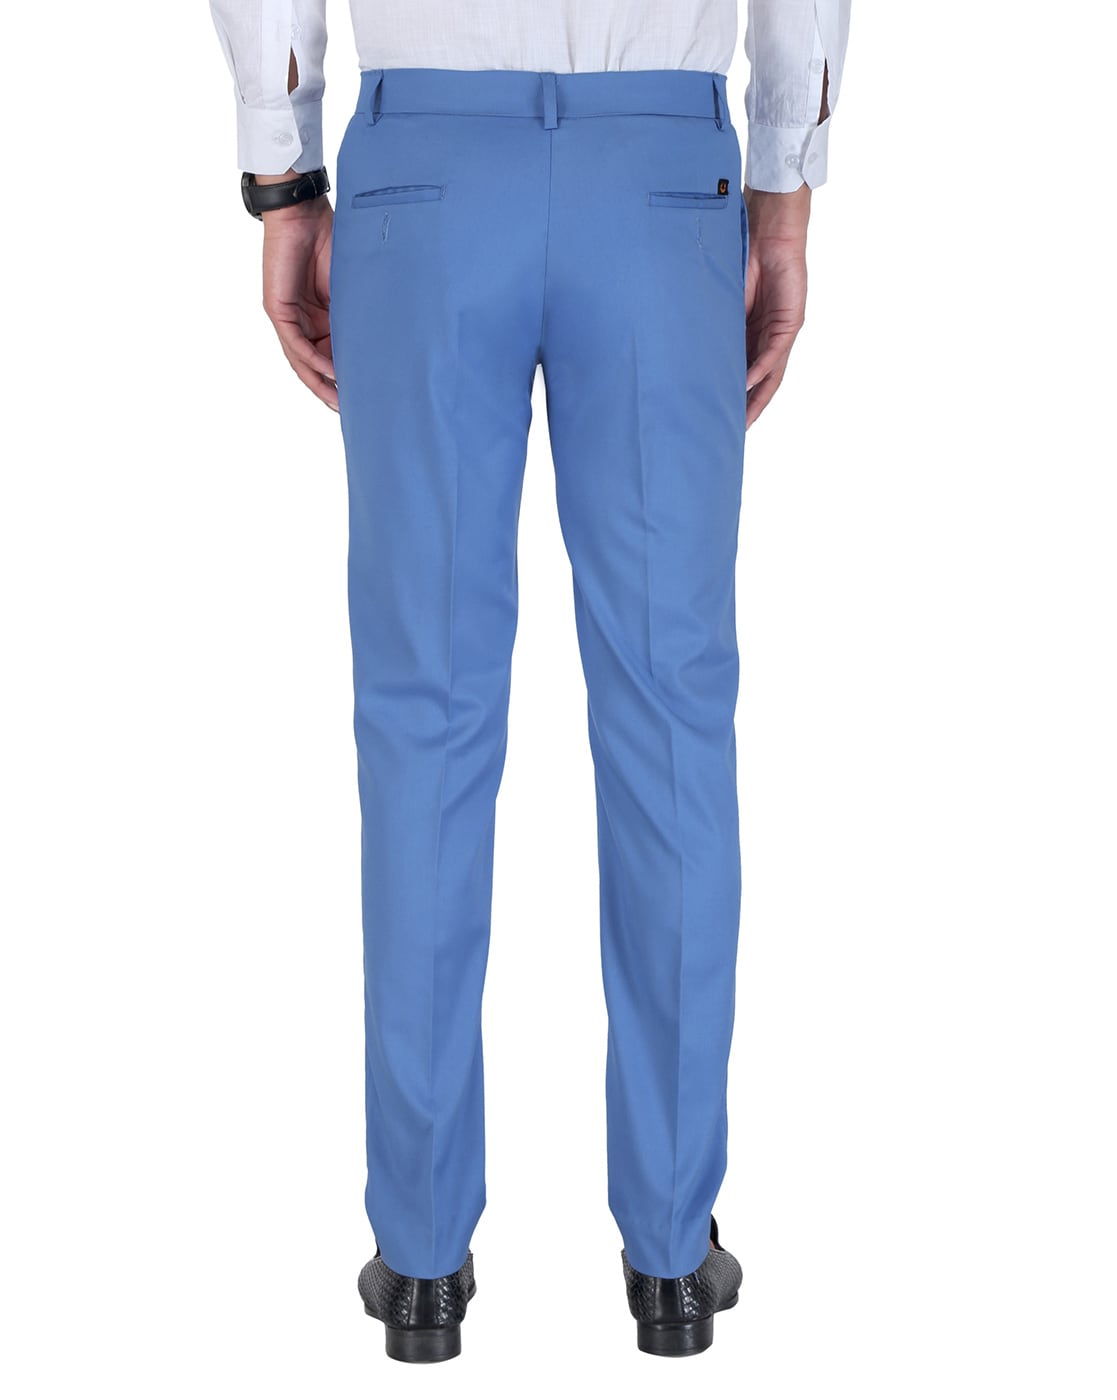 Buy Ocean Blue Trousers  Pants for Men by Uncrazy Online  Ajiocom